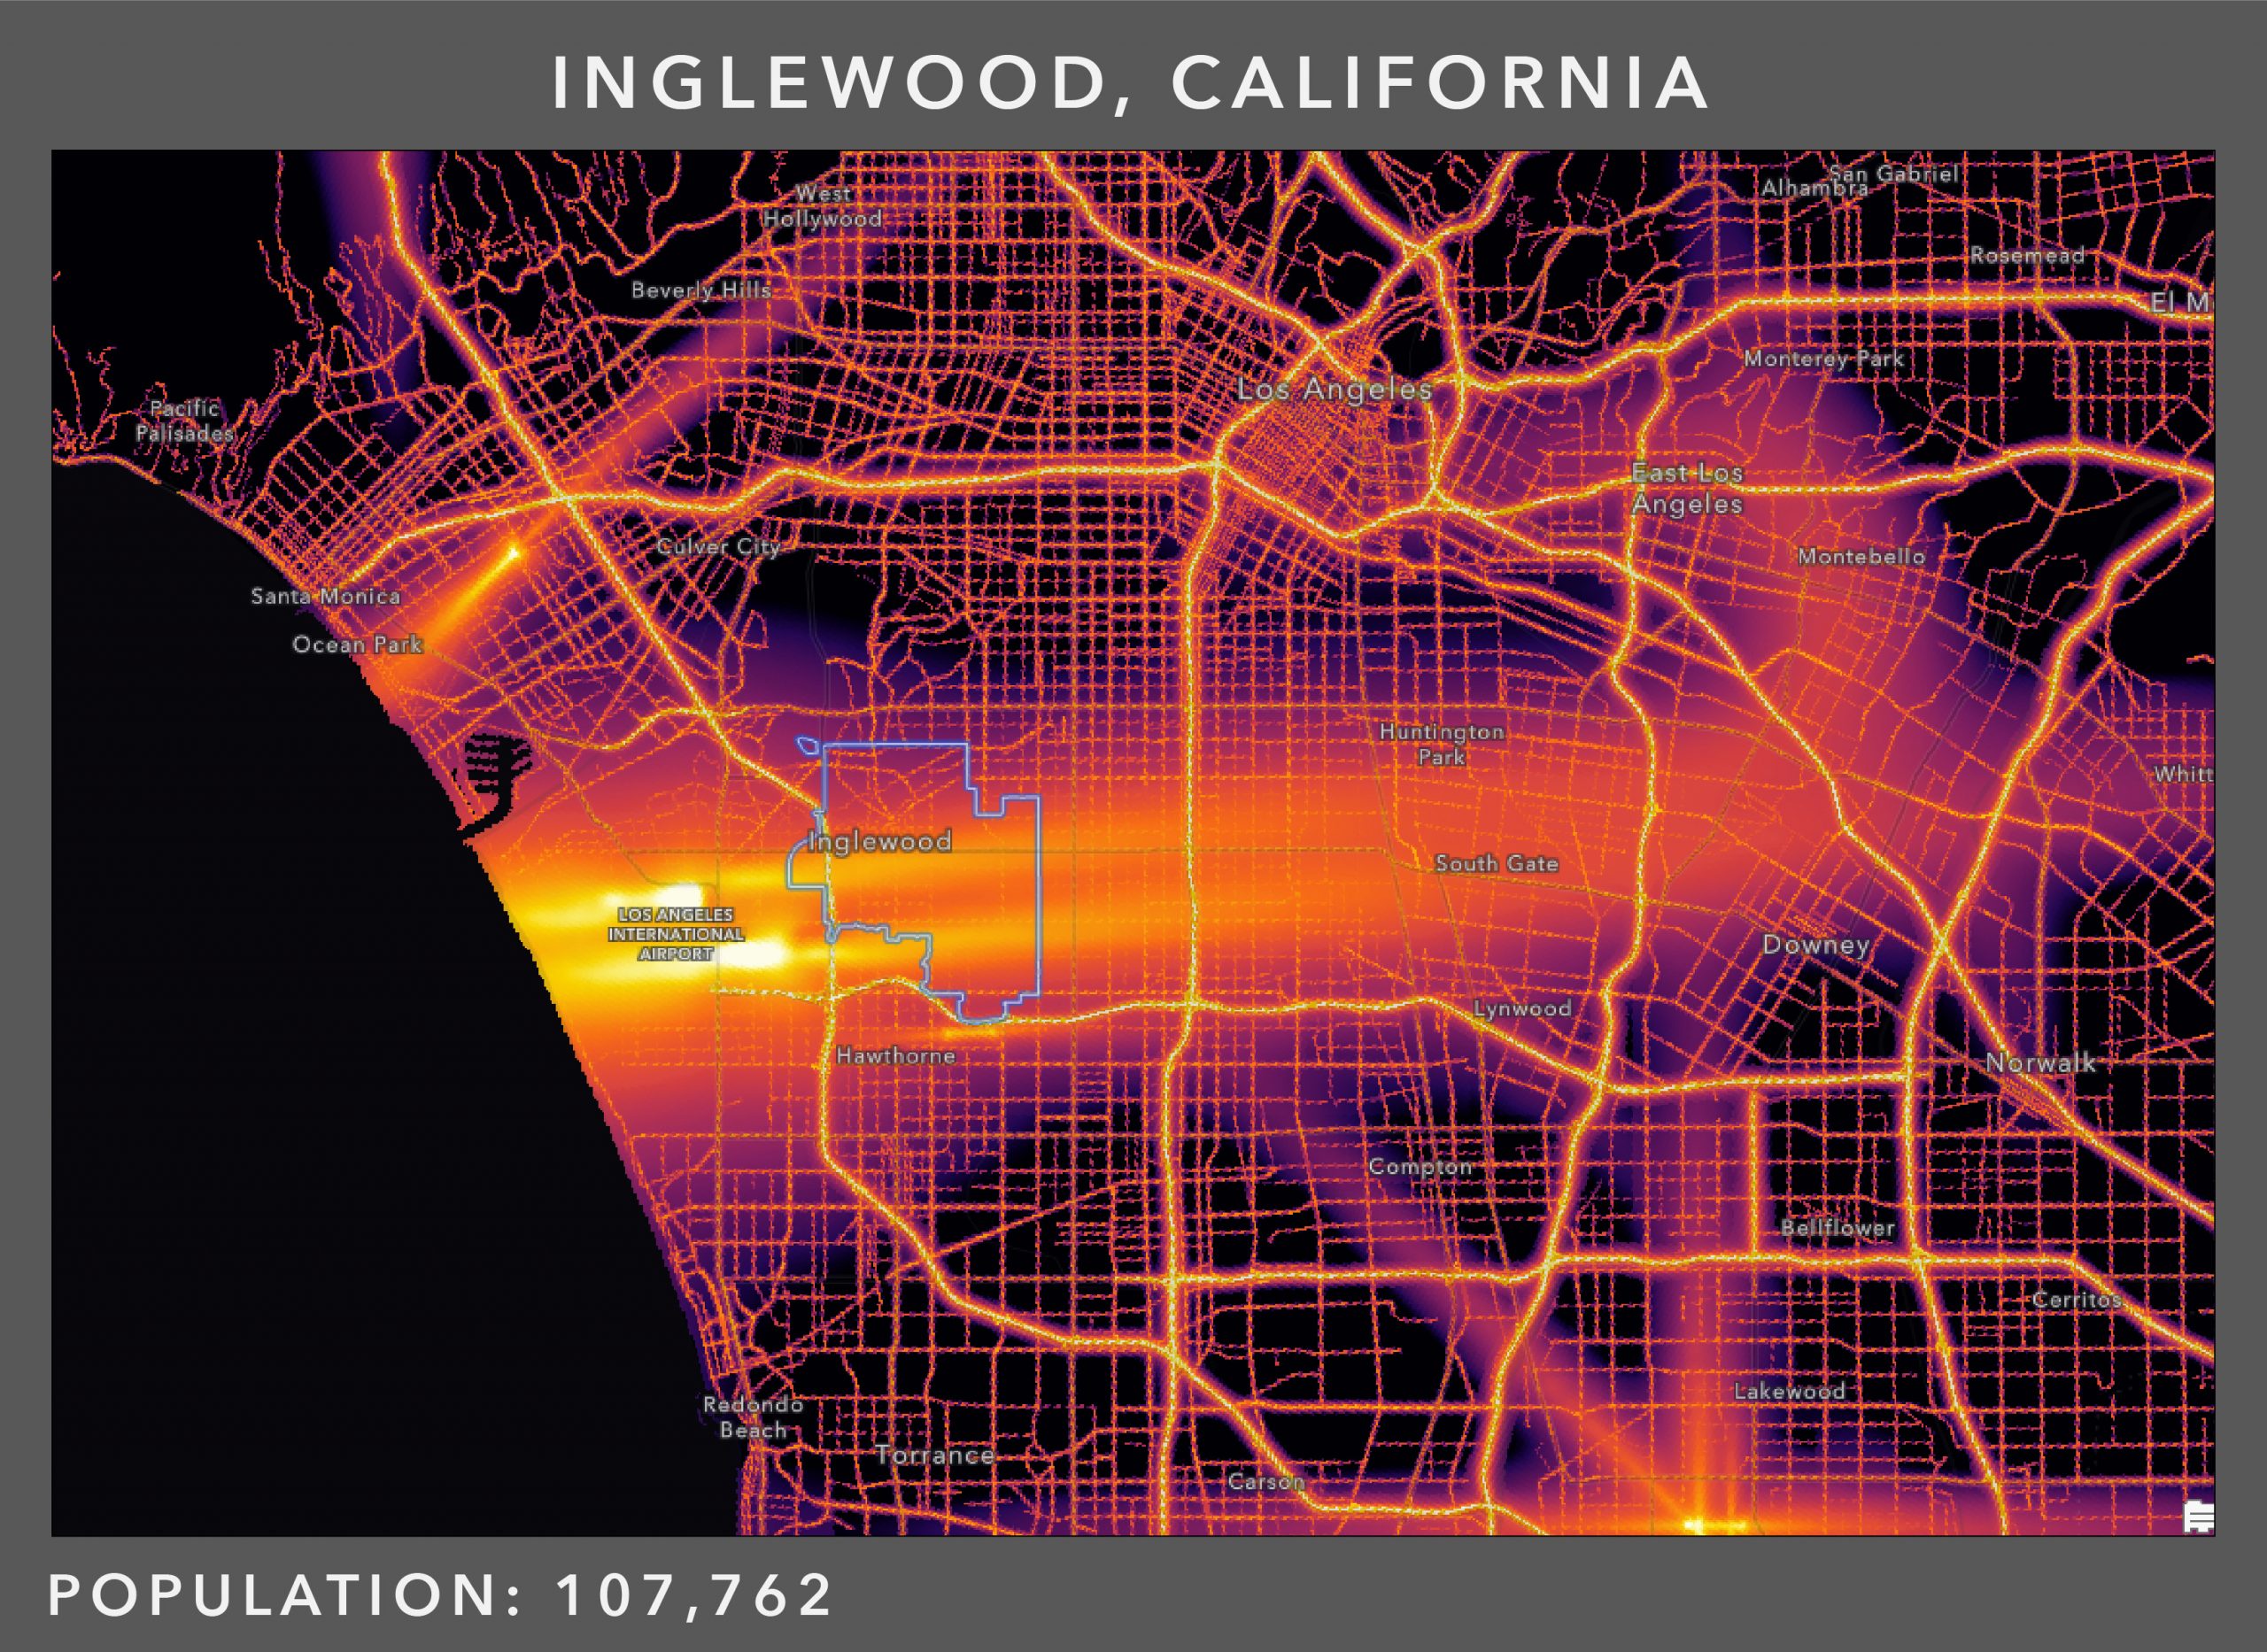 Detail of Inglewood, California noise patterns.